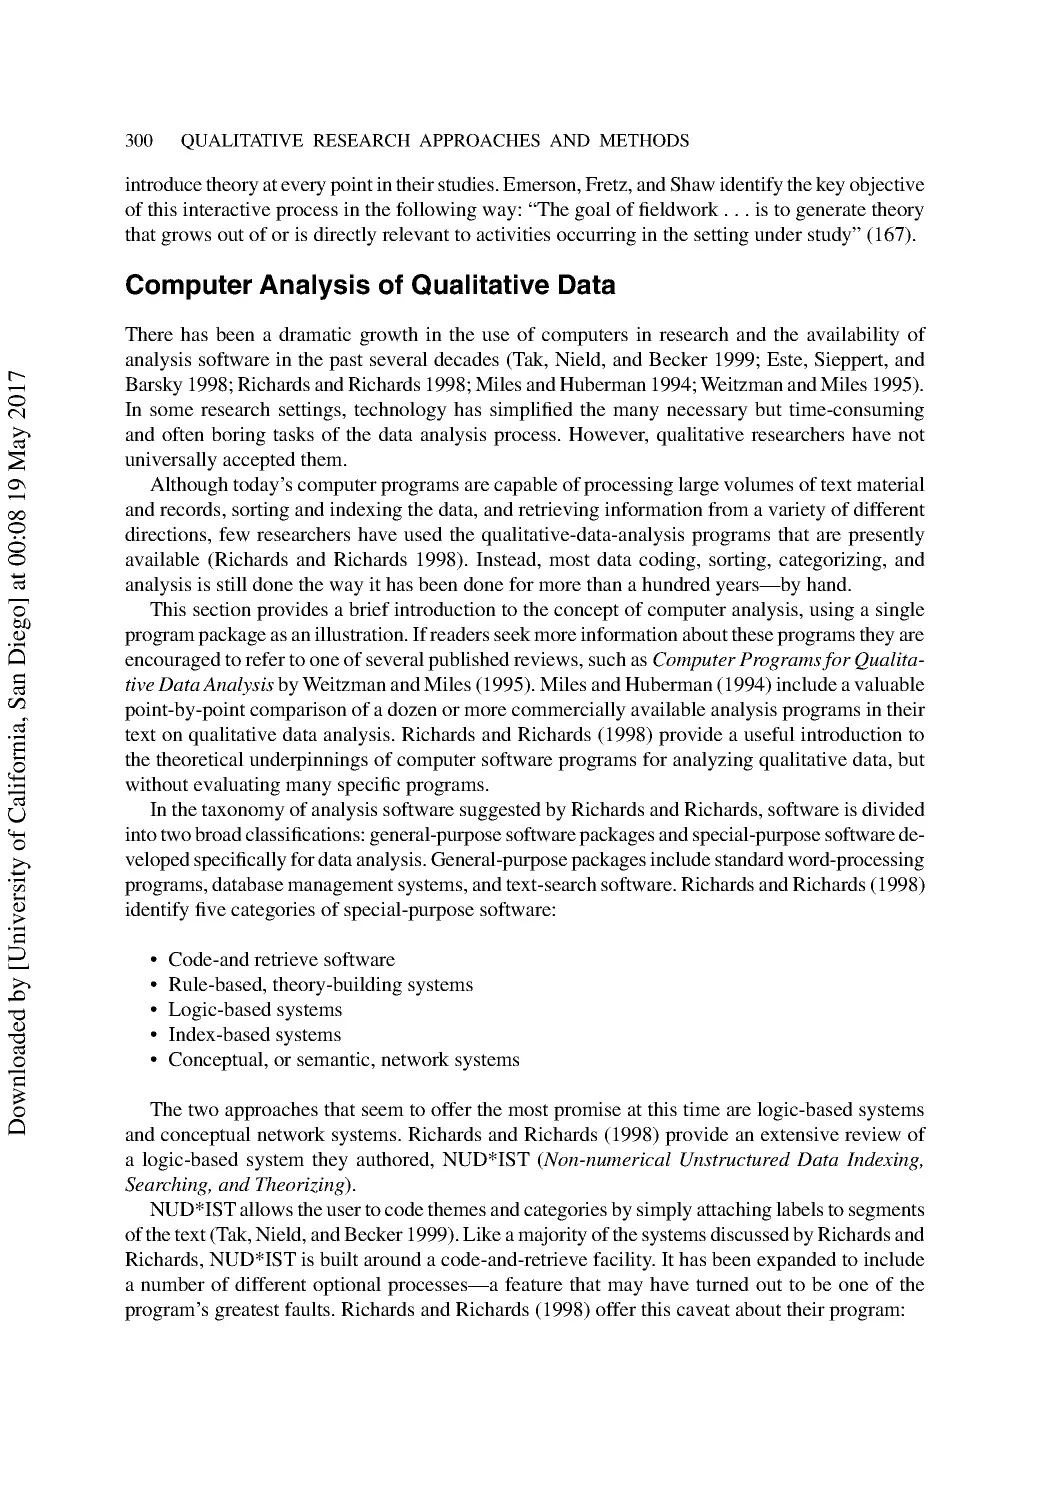 Computer Analysis of Qualitative Data